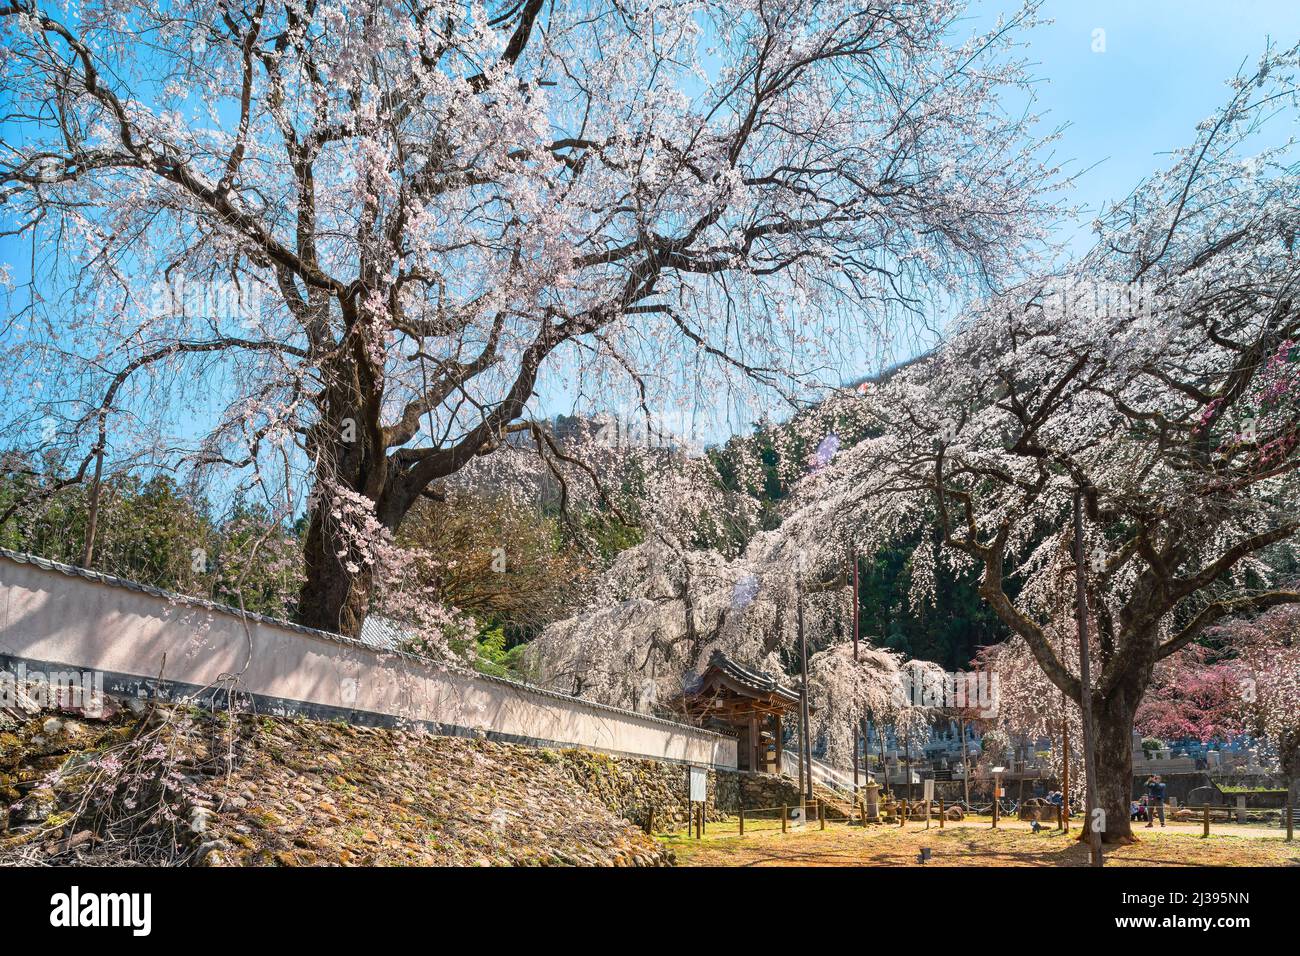 saitama, chichibu - april 04 2022: Majestic spring scenery depicting giantic shidarezakura weeping cherry blossoms trees overlooking the Yakuimon gate Stock Photo